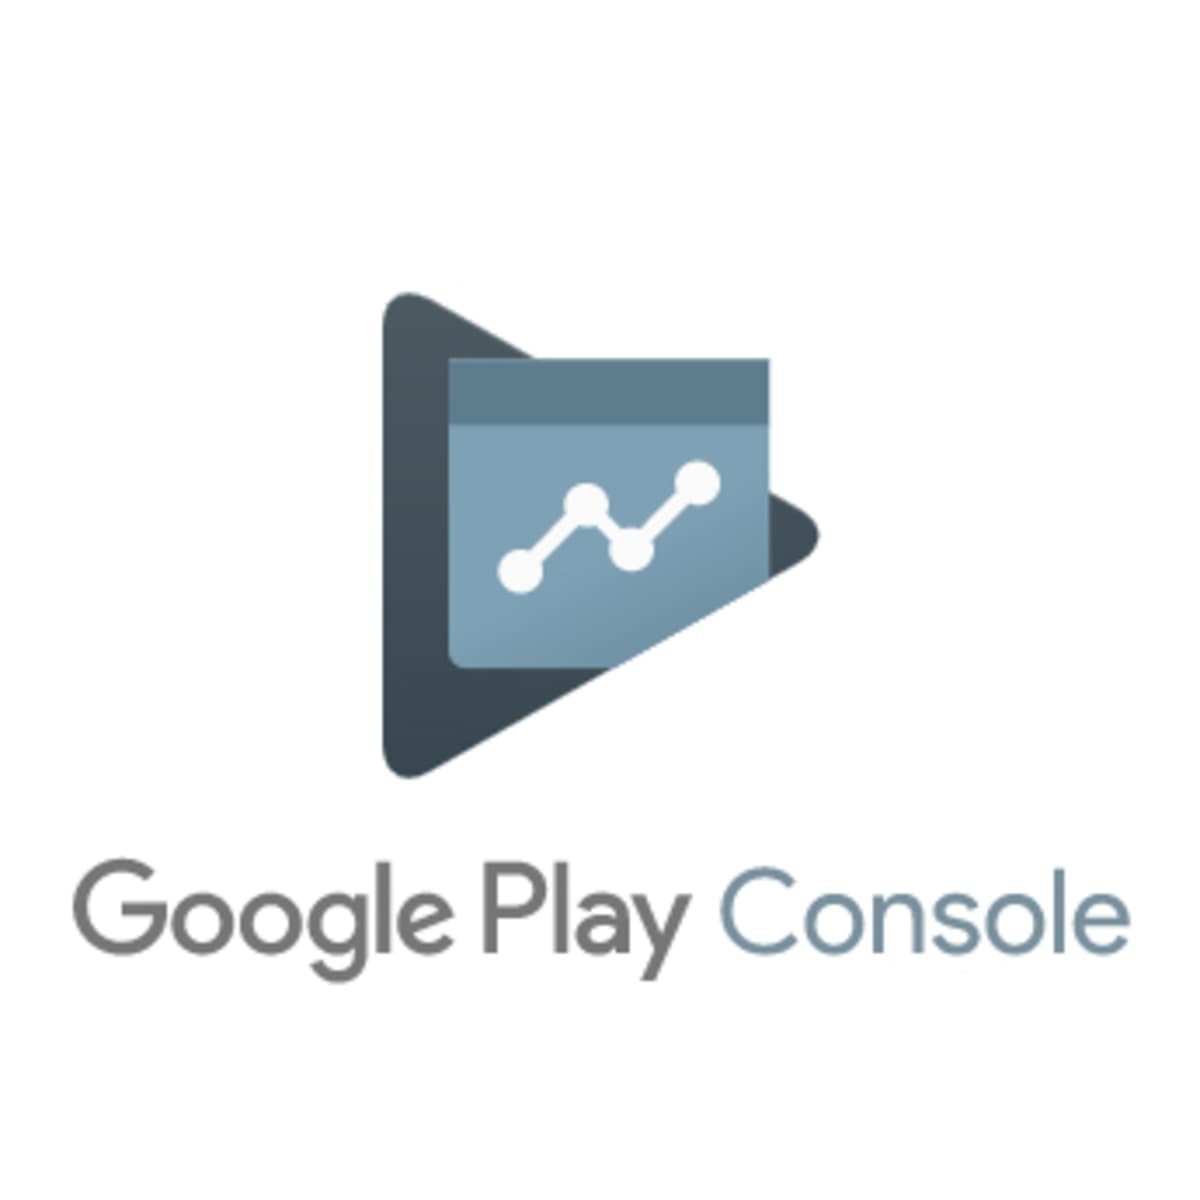 Google play market console. Плей консоль. Google Play Console. Google Play Console developer. Google Play developer Console icon.